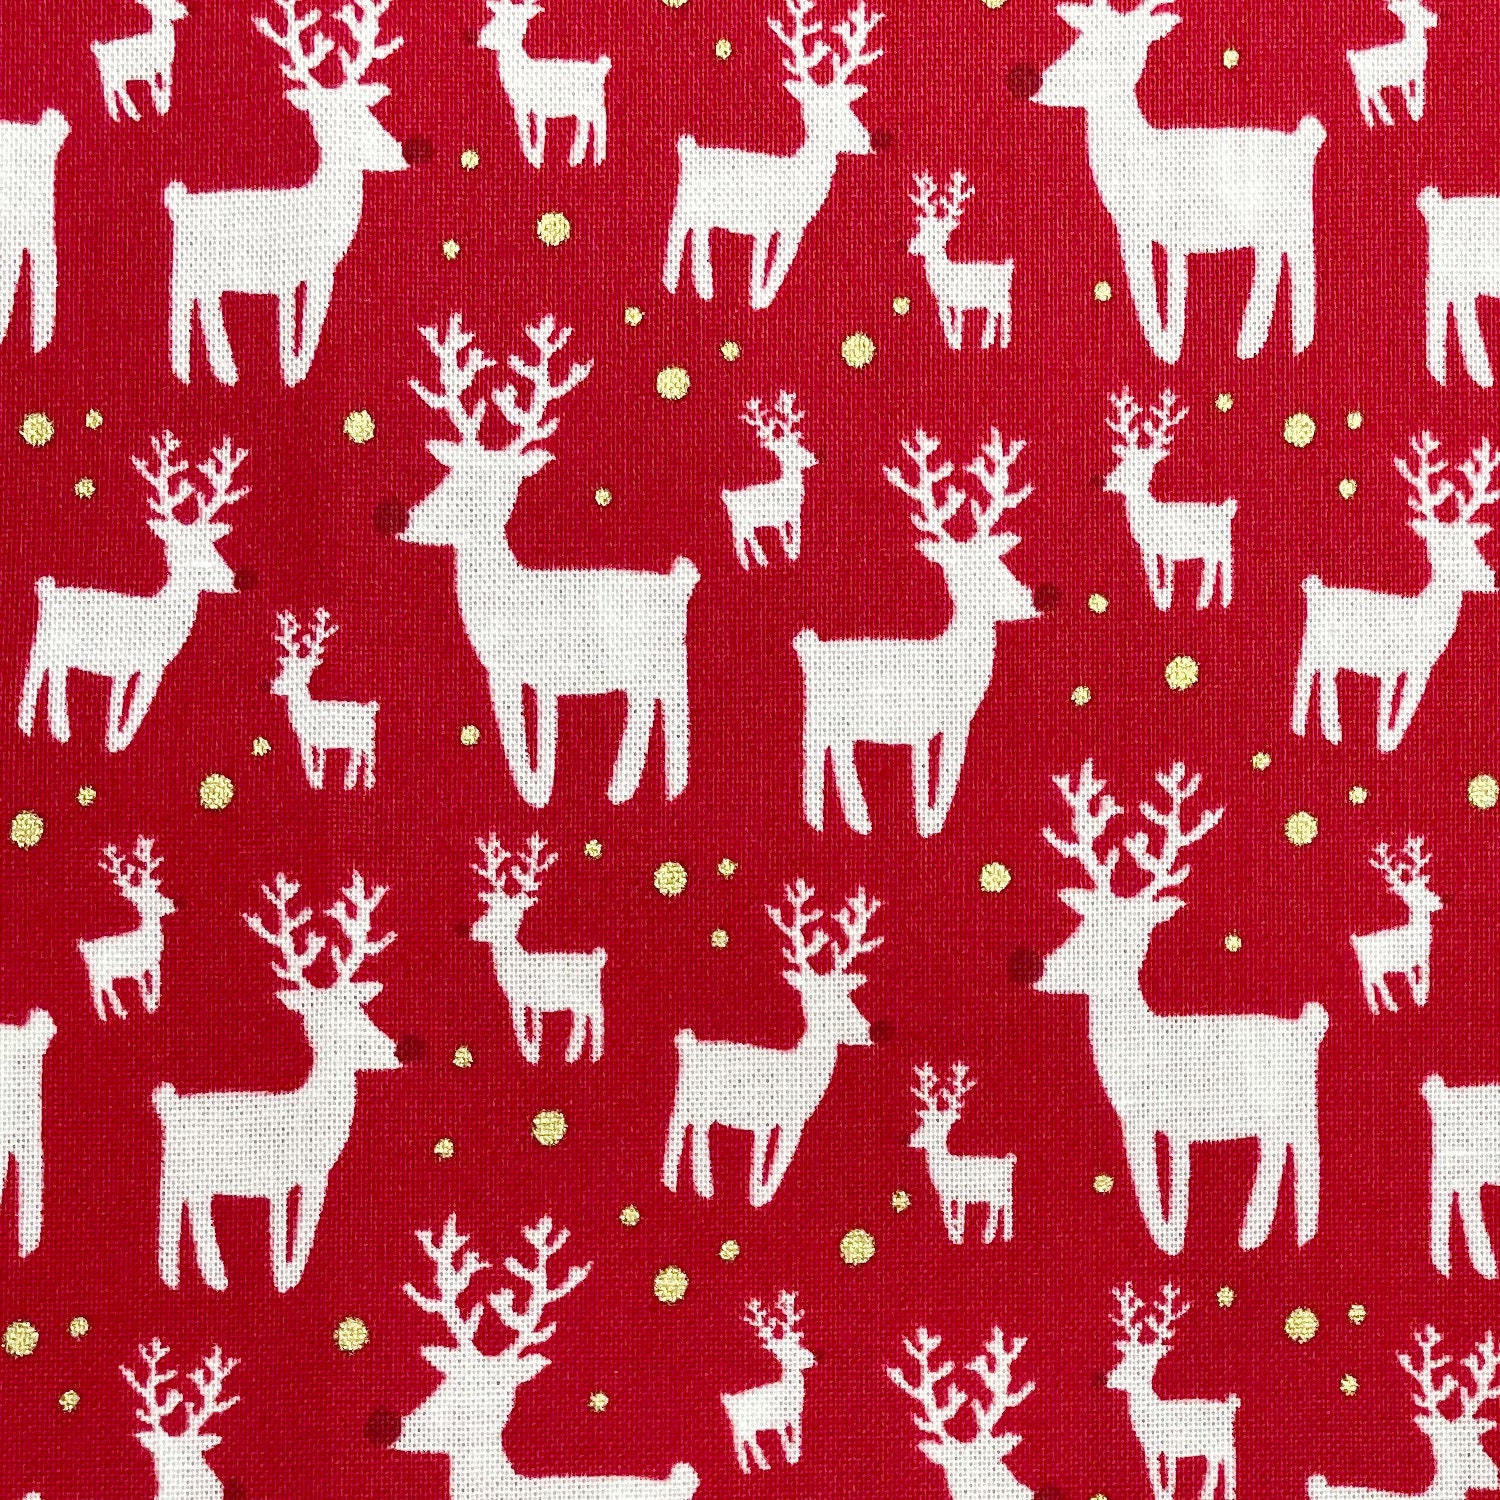 CUSTOMIZABLE North Pole reindeer white Fabric